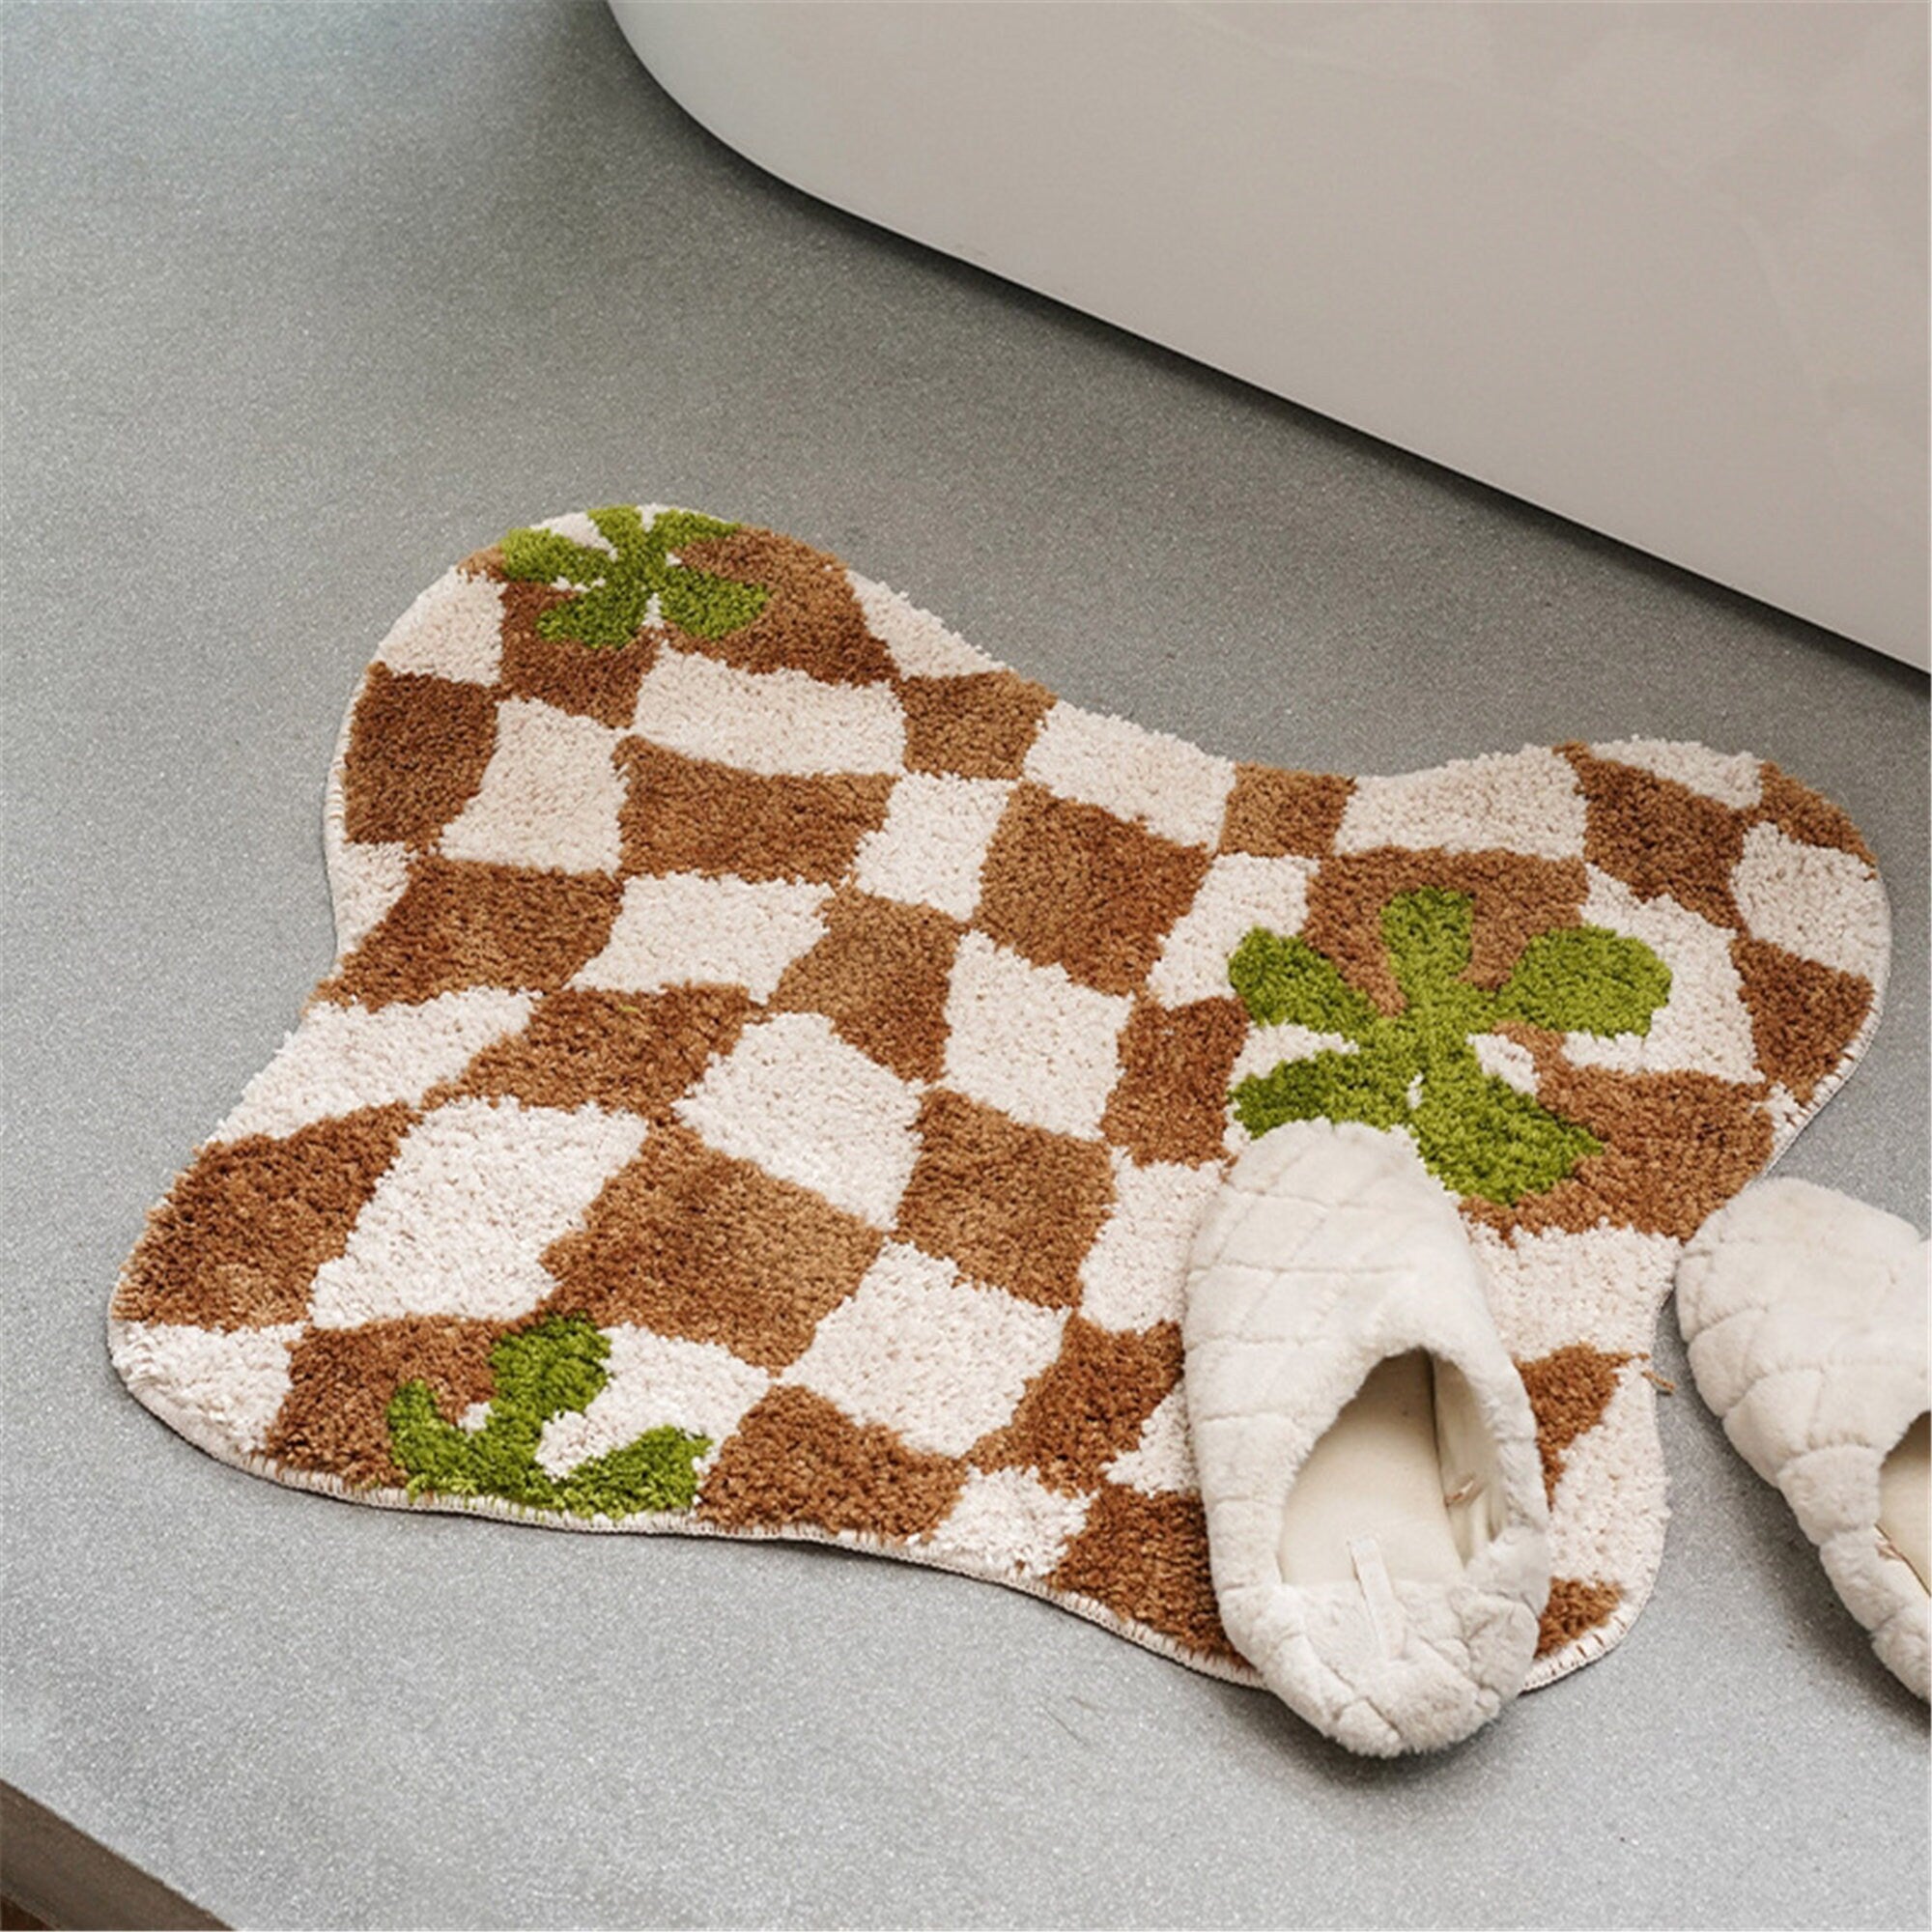 Tufted Checkered Rug, Irregular Shape Mats, Entryway Floor Decorative, Soft Bath Shower Mat, Absorbent Non Slip Bathroom Rugs, Fluffy Carpet